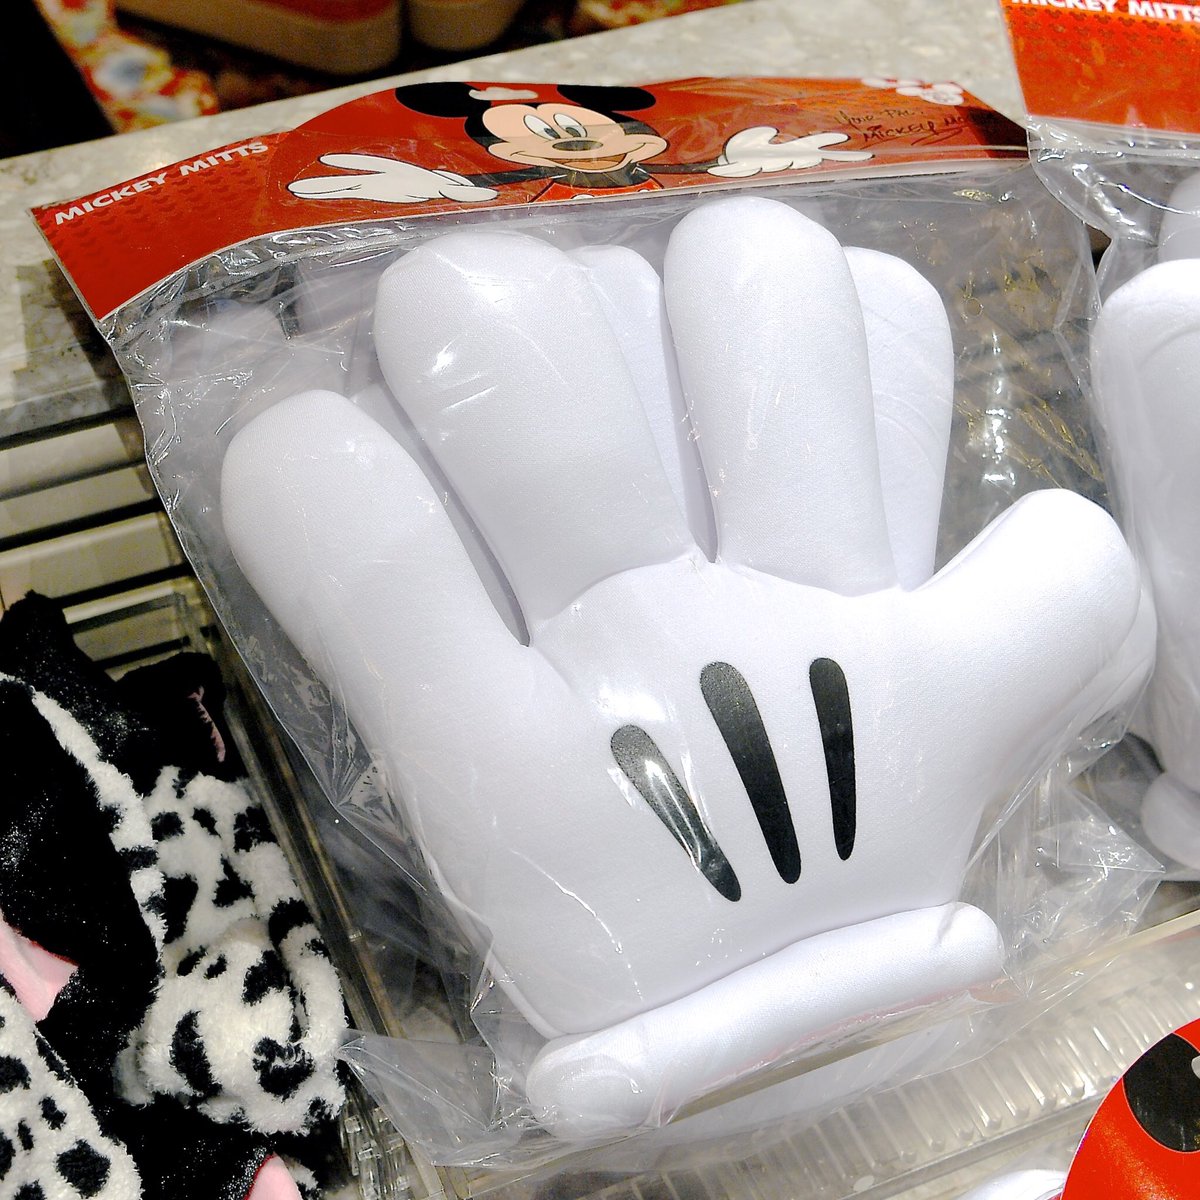 Mezzomikiのディズニーブログ Na Twitteru ミッキーの大きな手袋発売中 価格1500円です T Co Vbol7x5jre